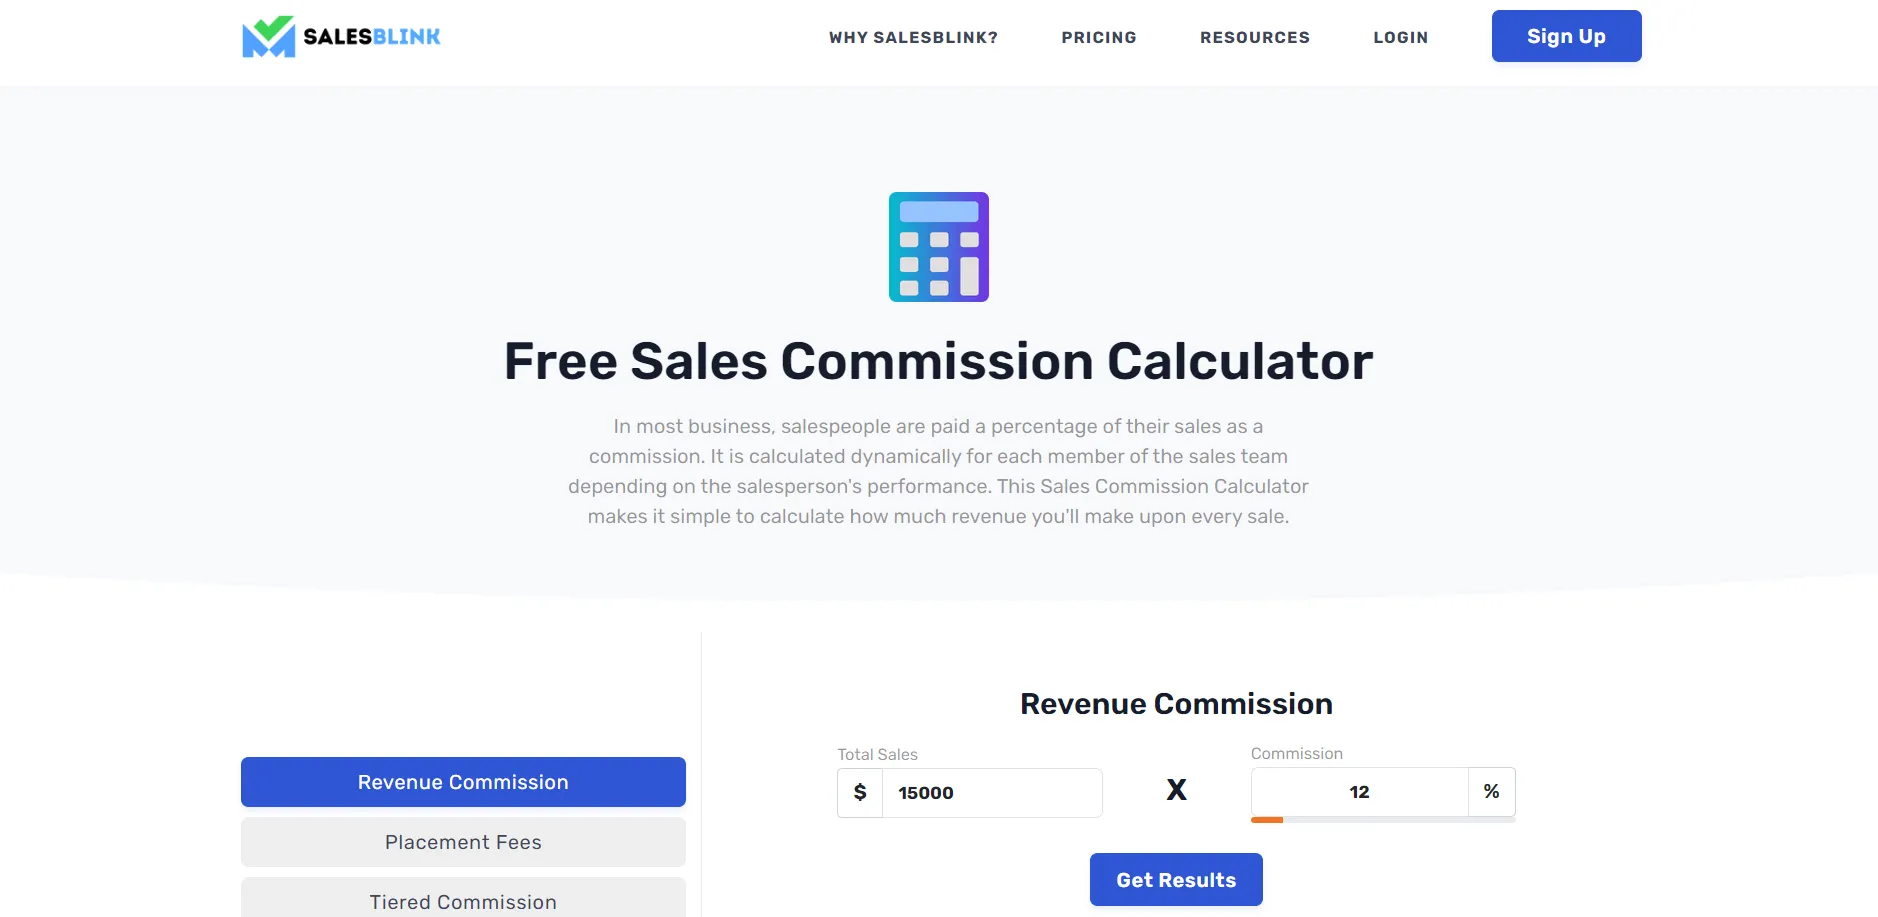 Sales Commission Calculator